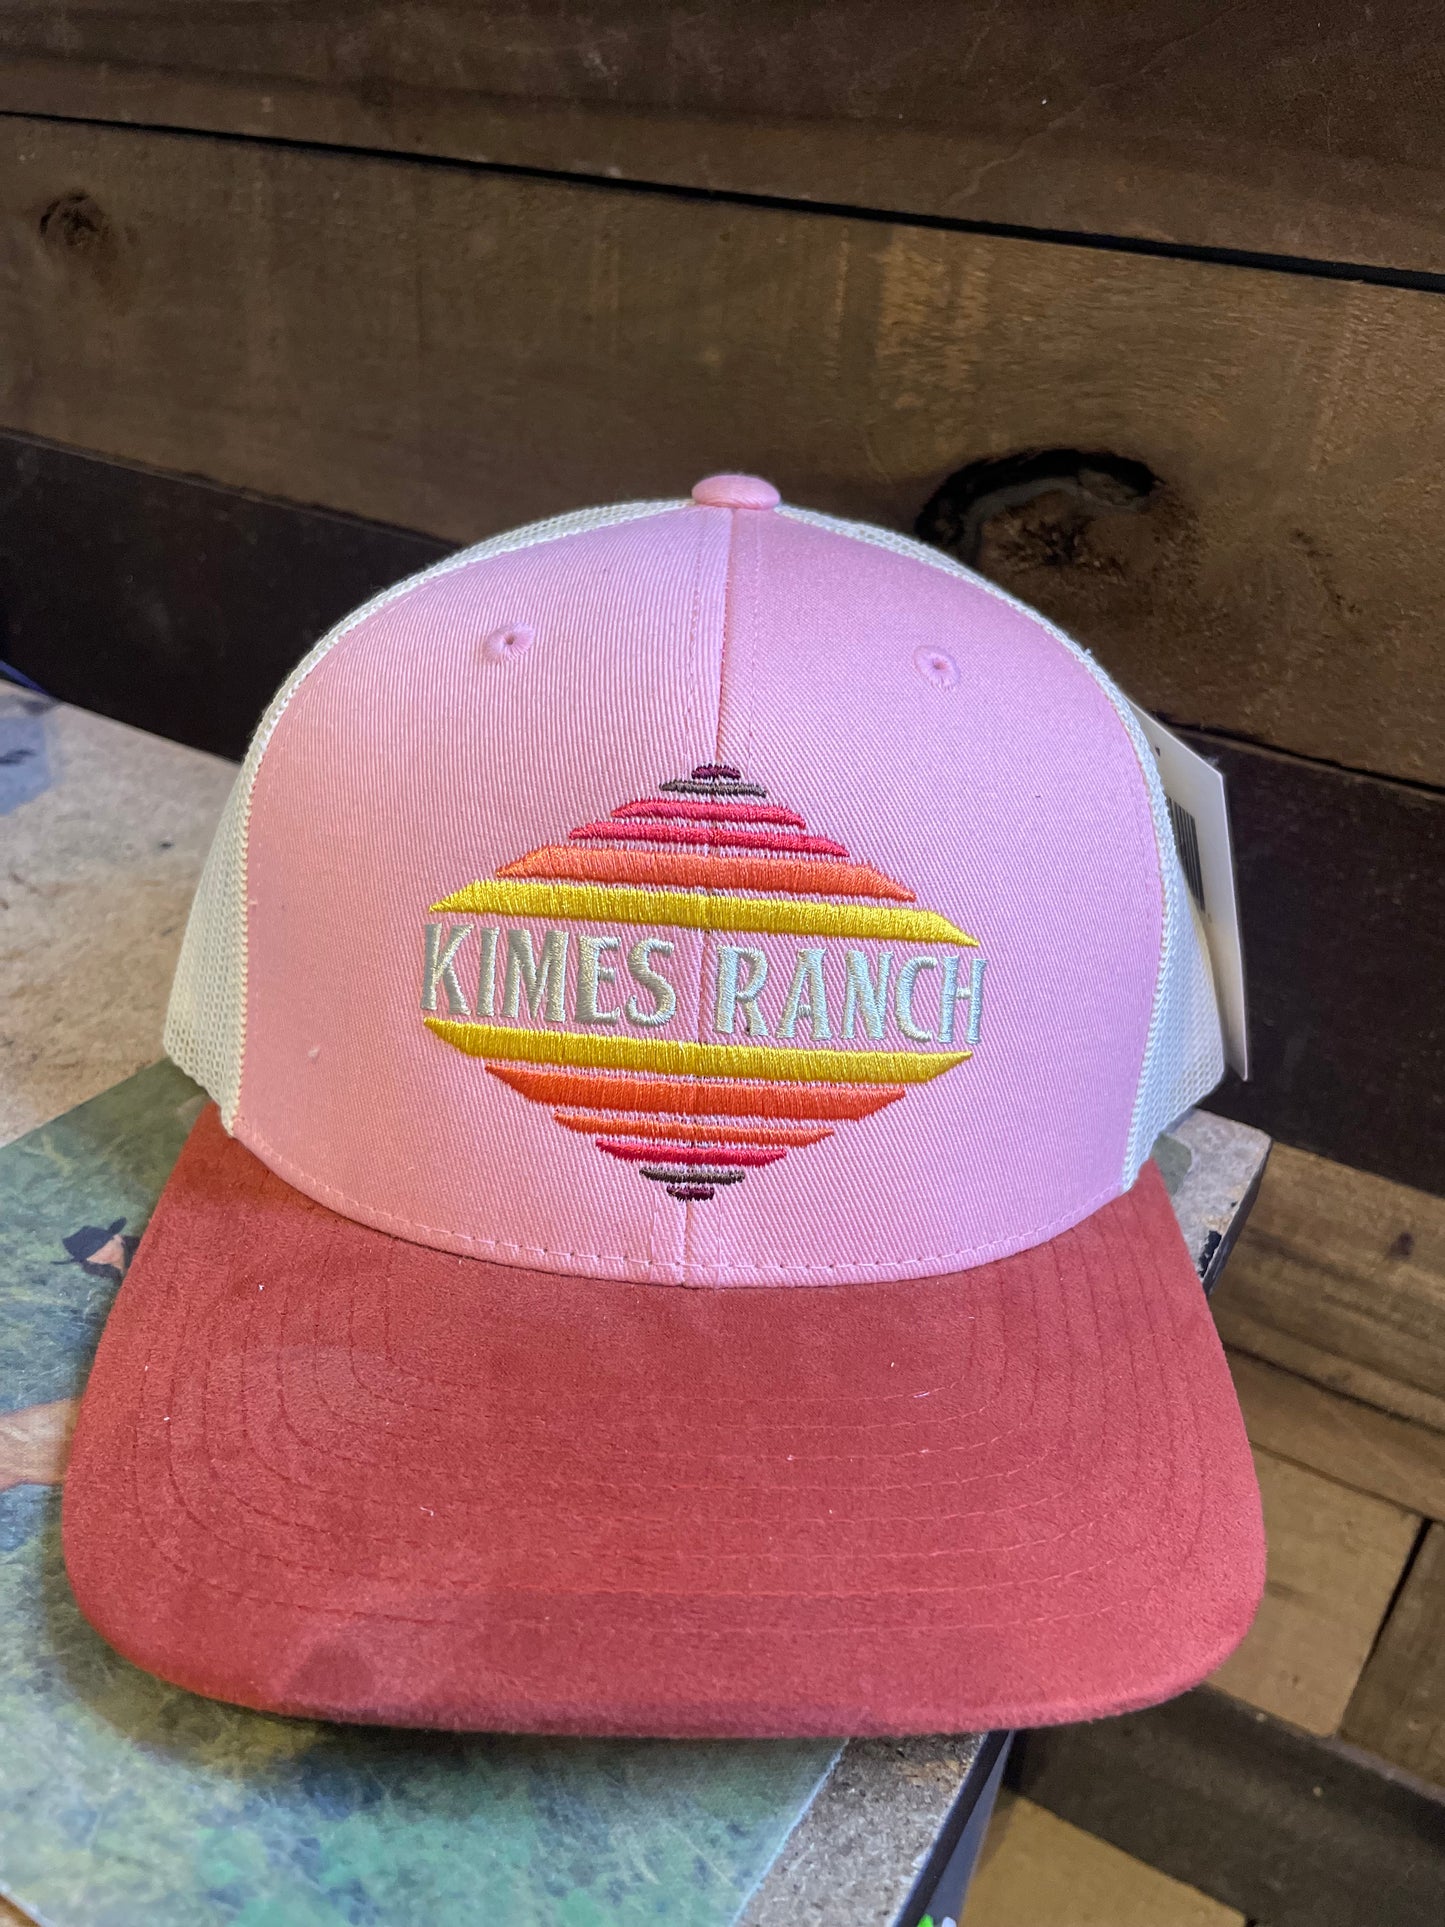 Kimes Caps